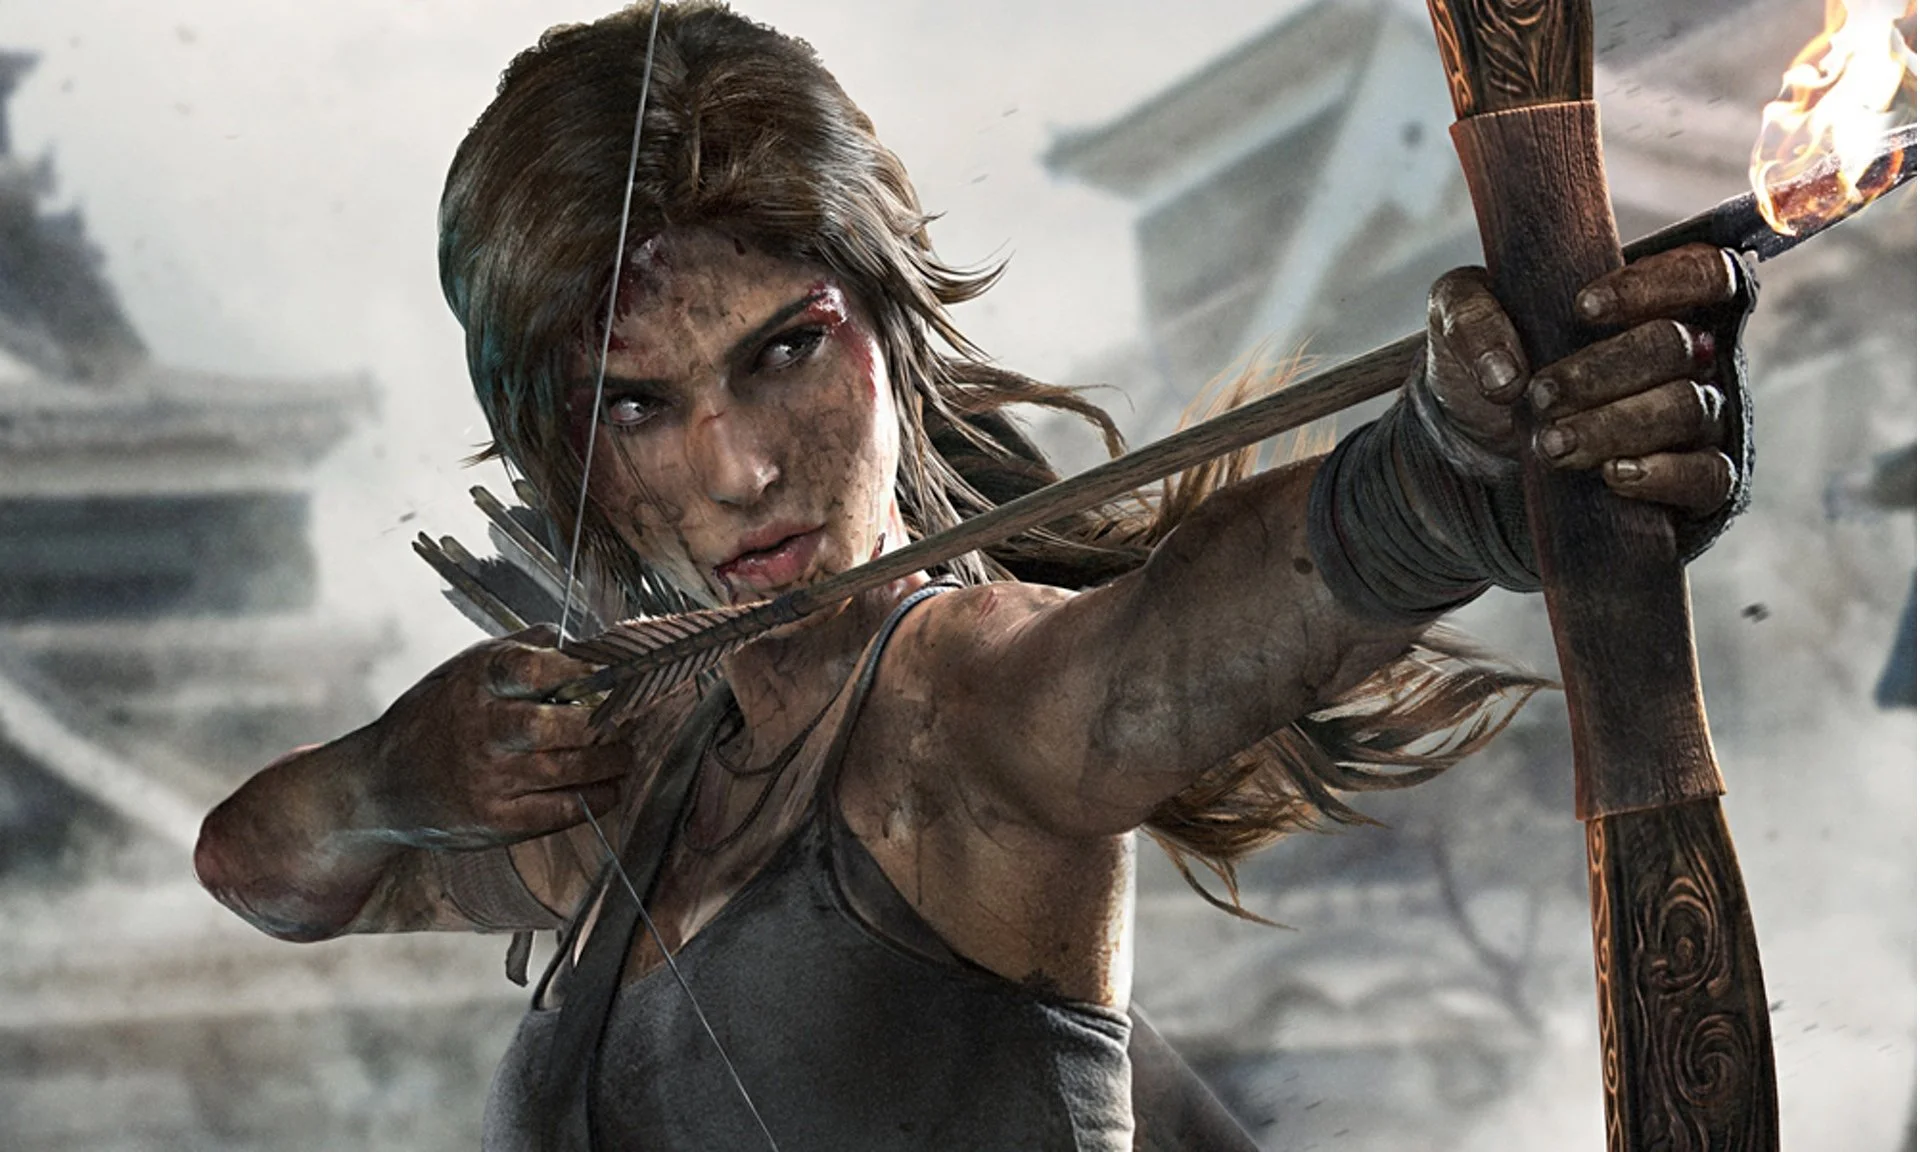 Microsoft издаст Rise of the Tomb Raider и поможет делать игру - фото 1